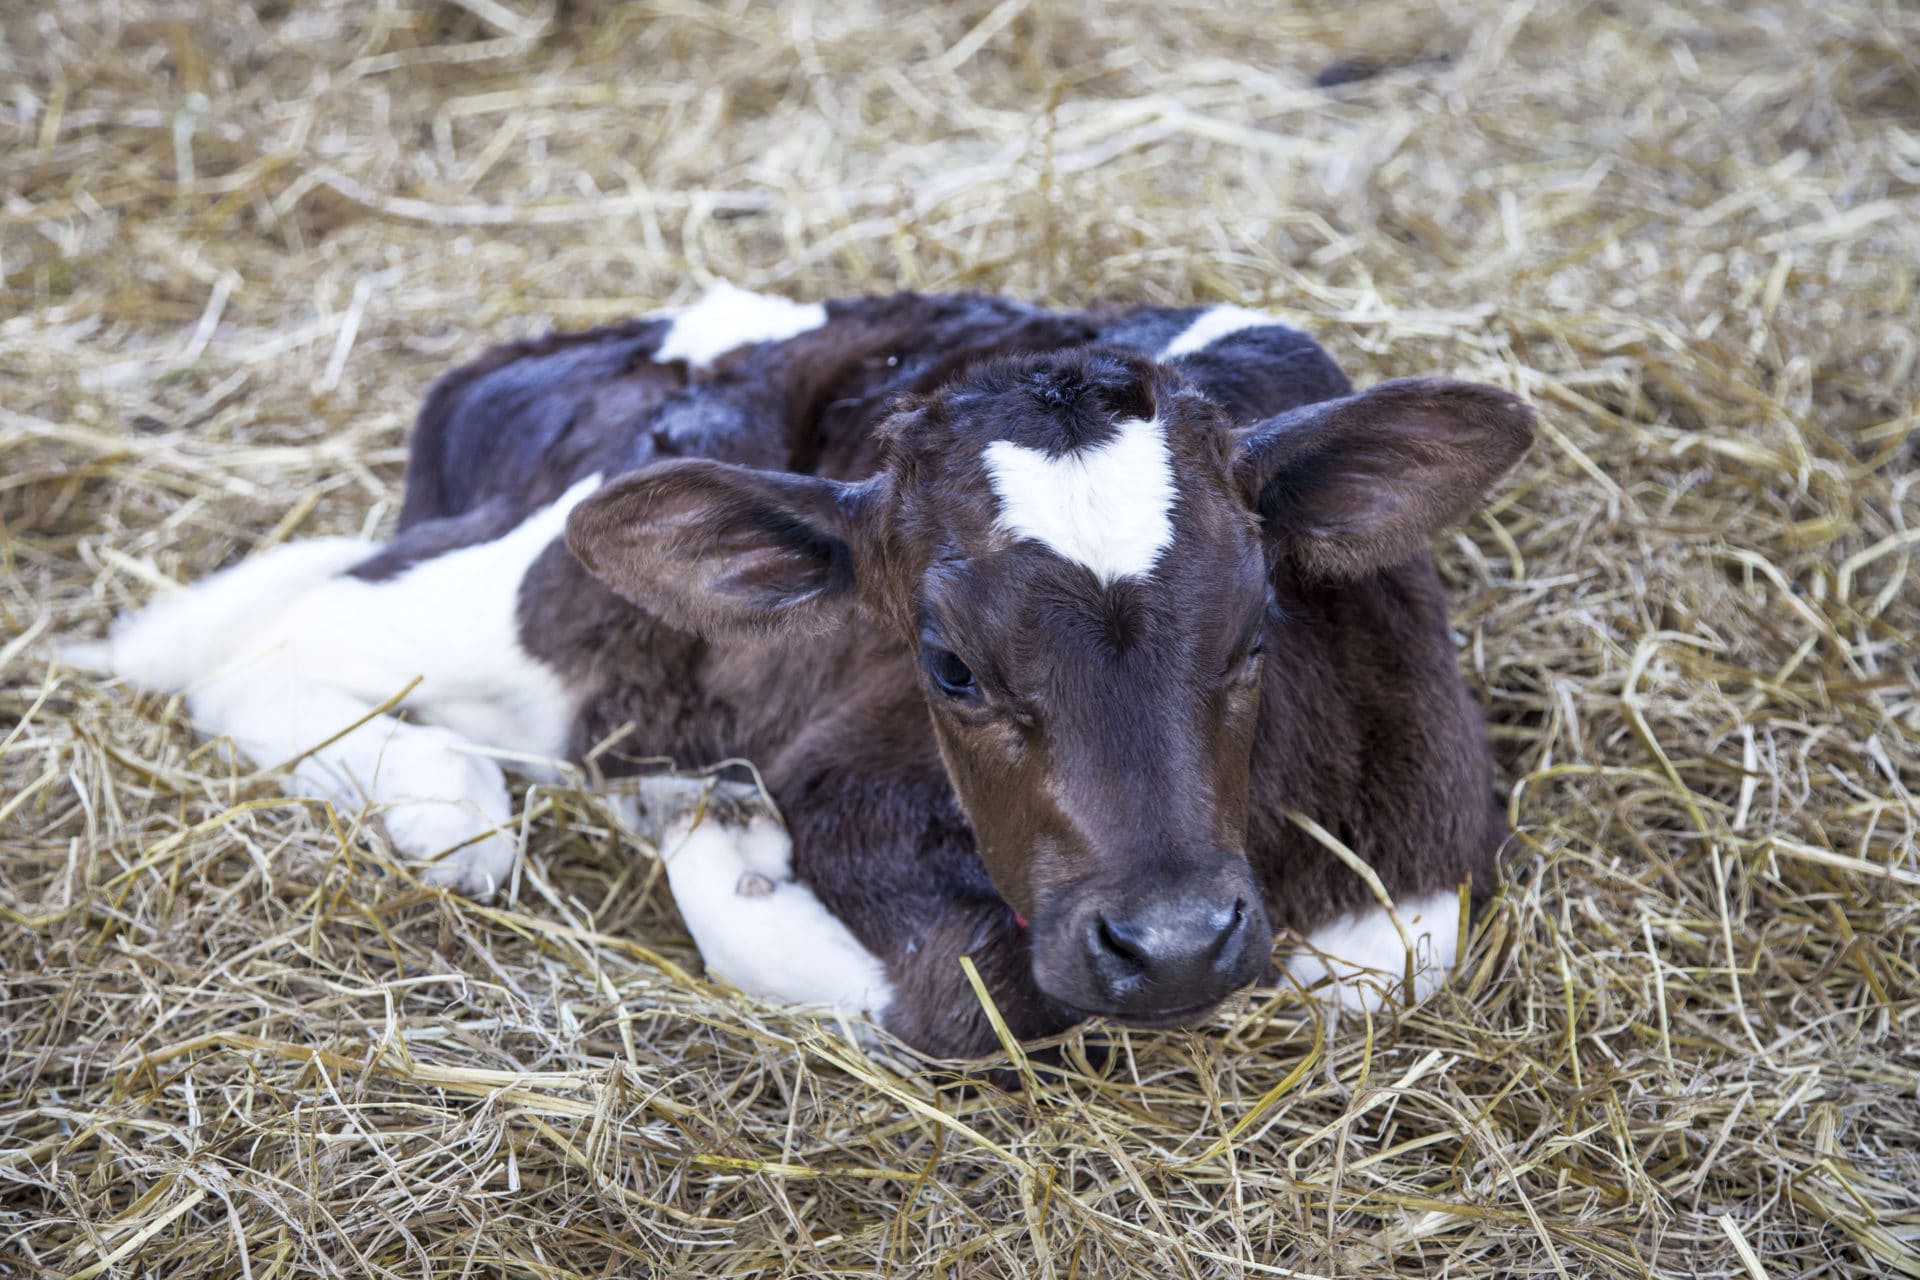 newborn calf on dry grass